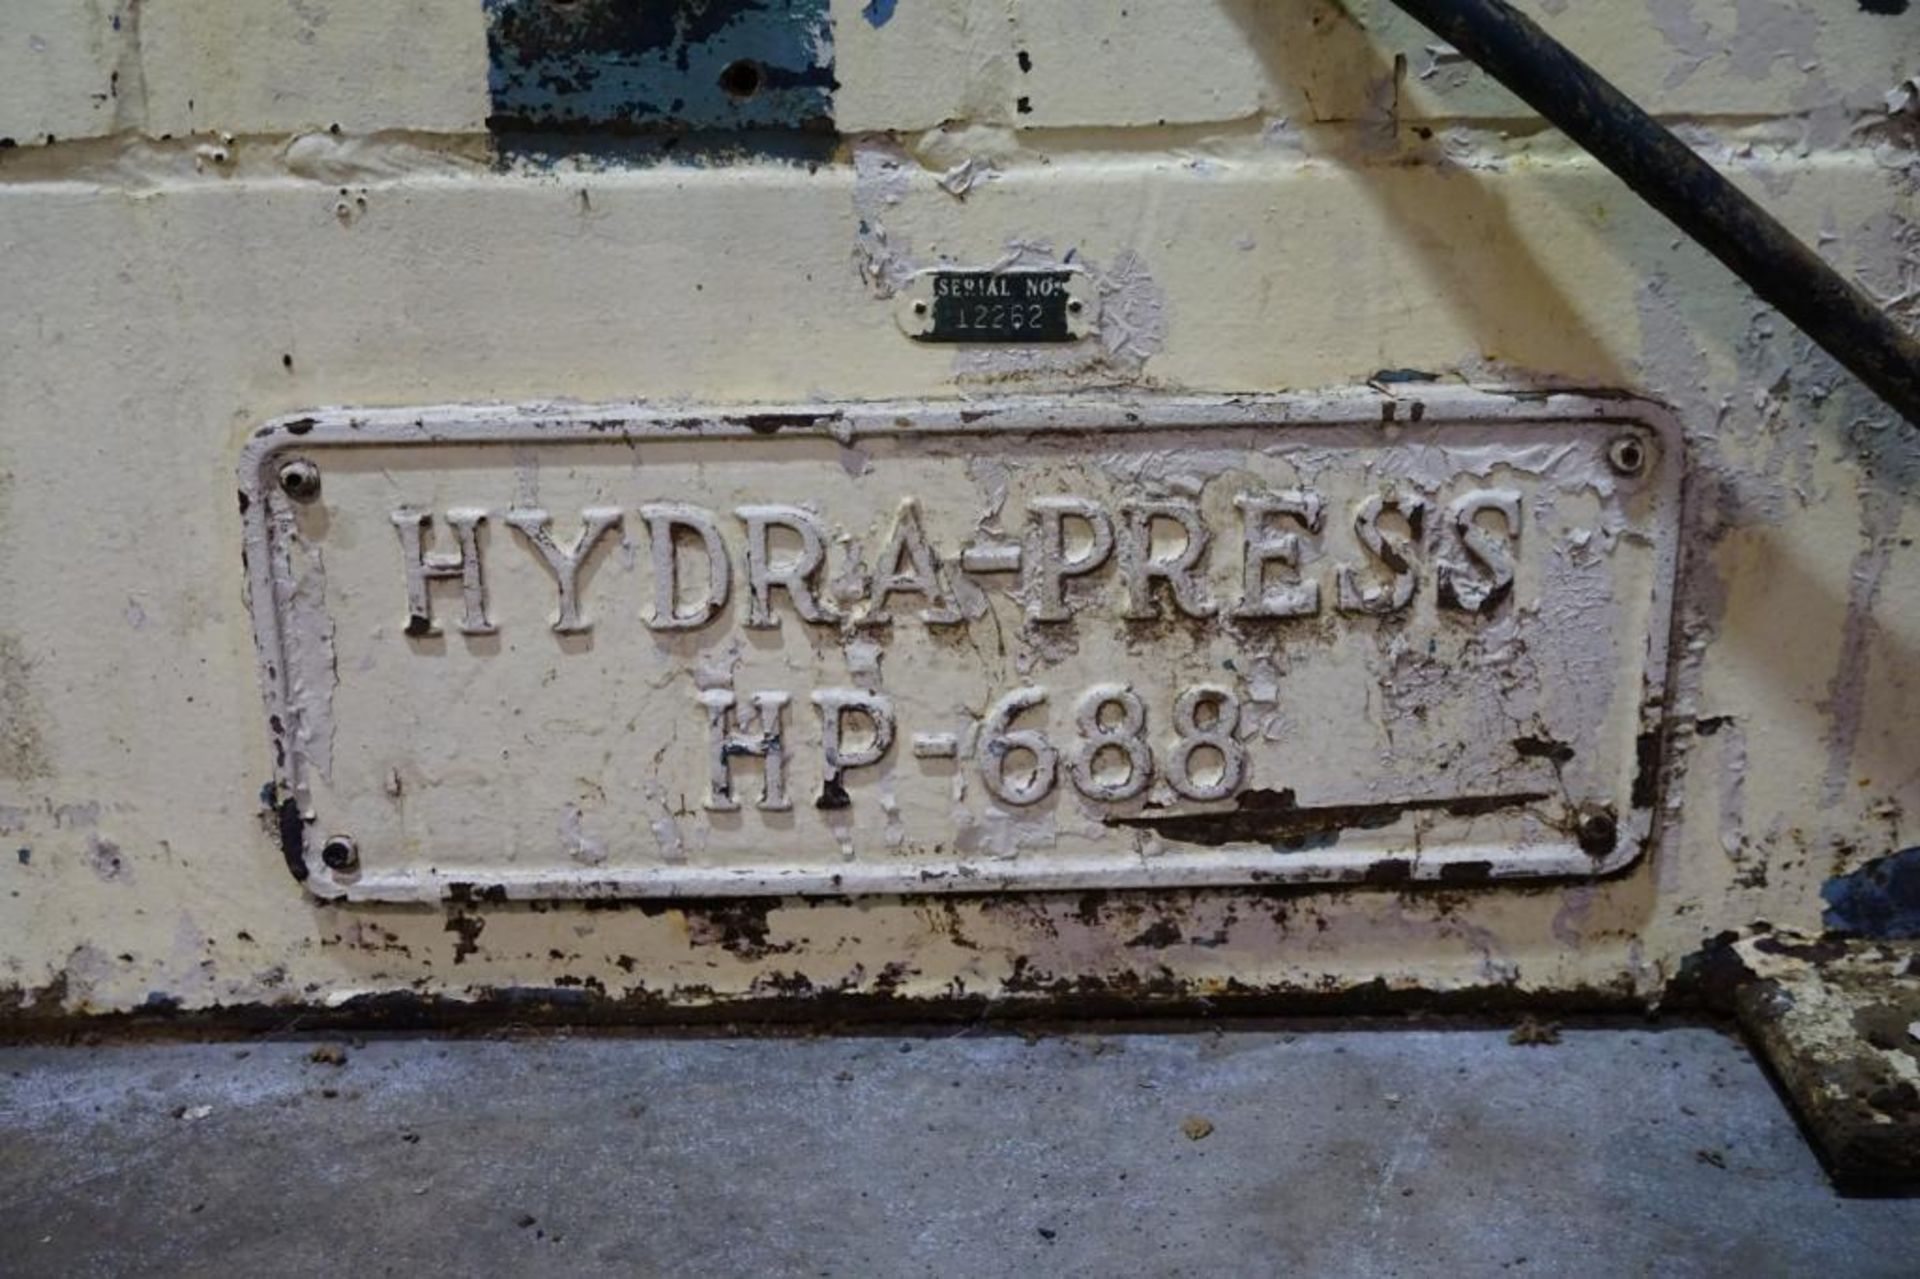 Newman Hydra-Press - Image 5 of 8